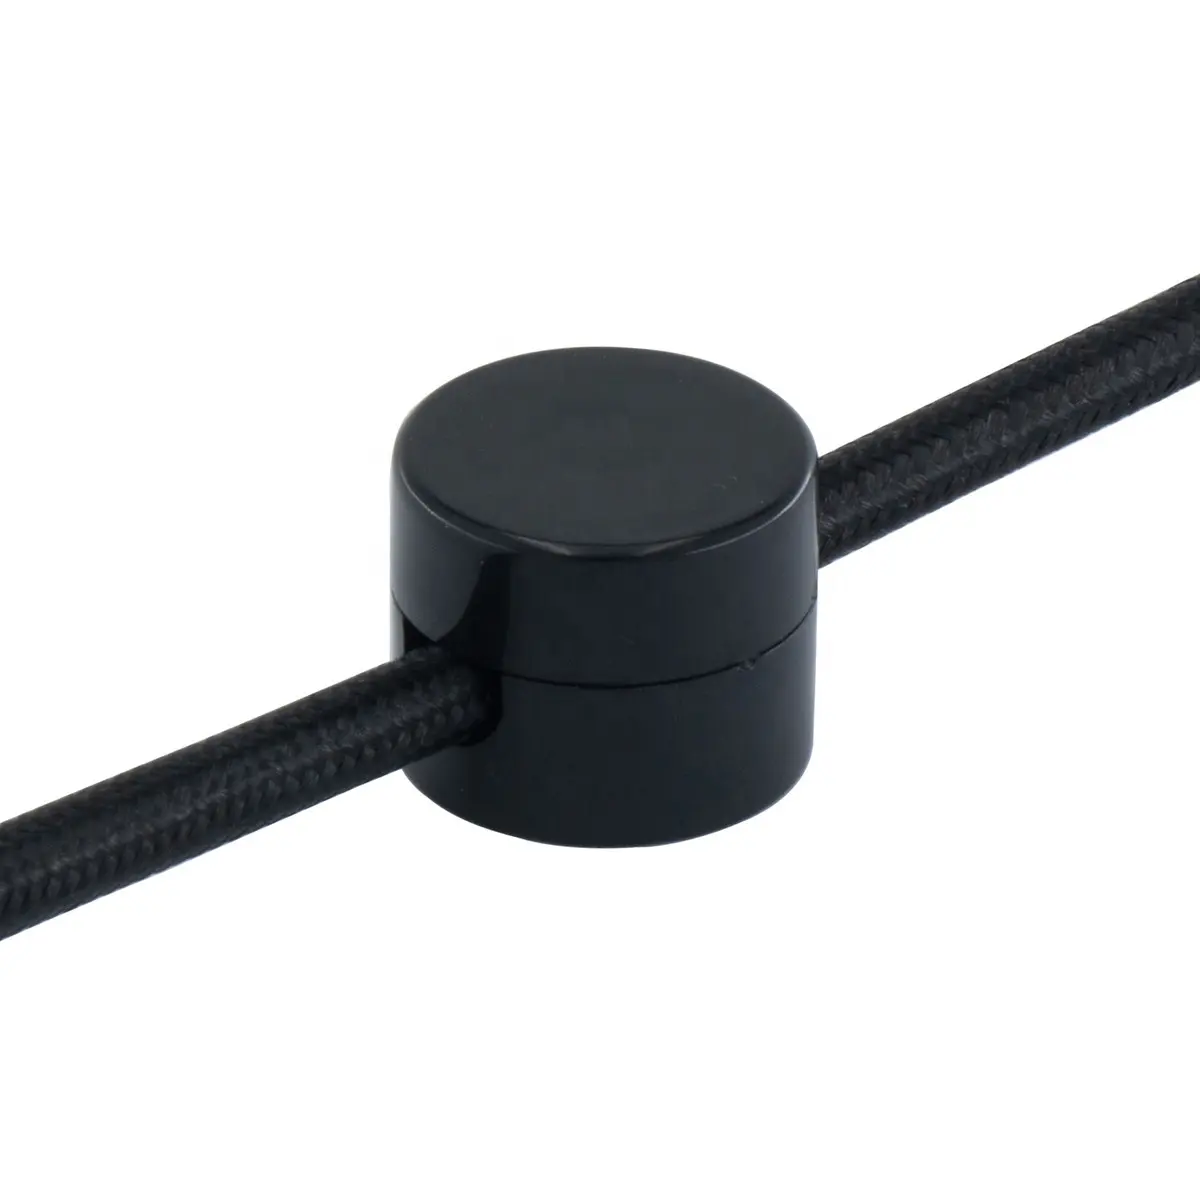 Kunststoff kabel halter clip universal wand seilführung für stoff kabel draht klemme